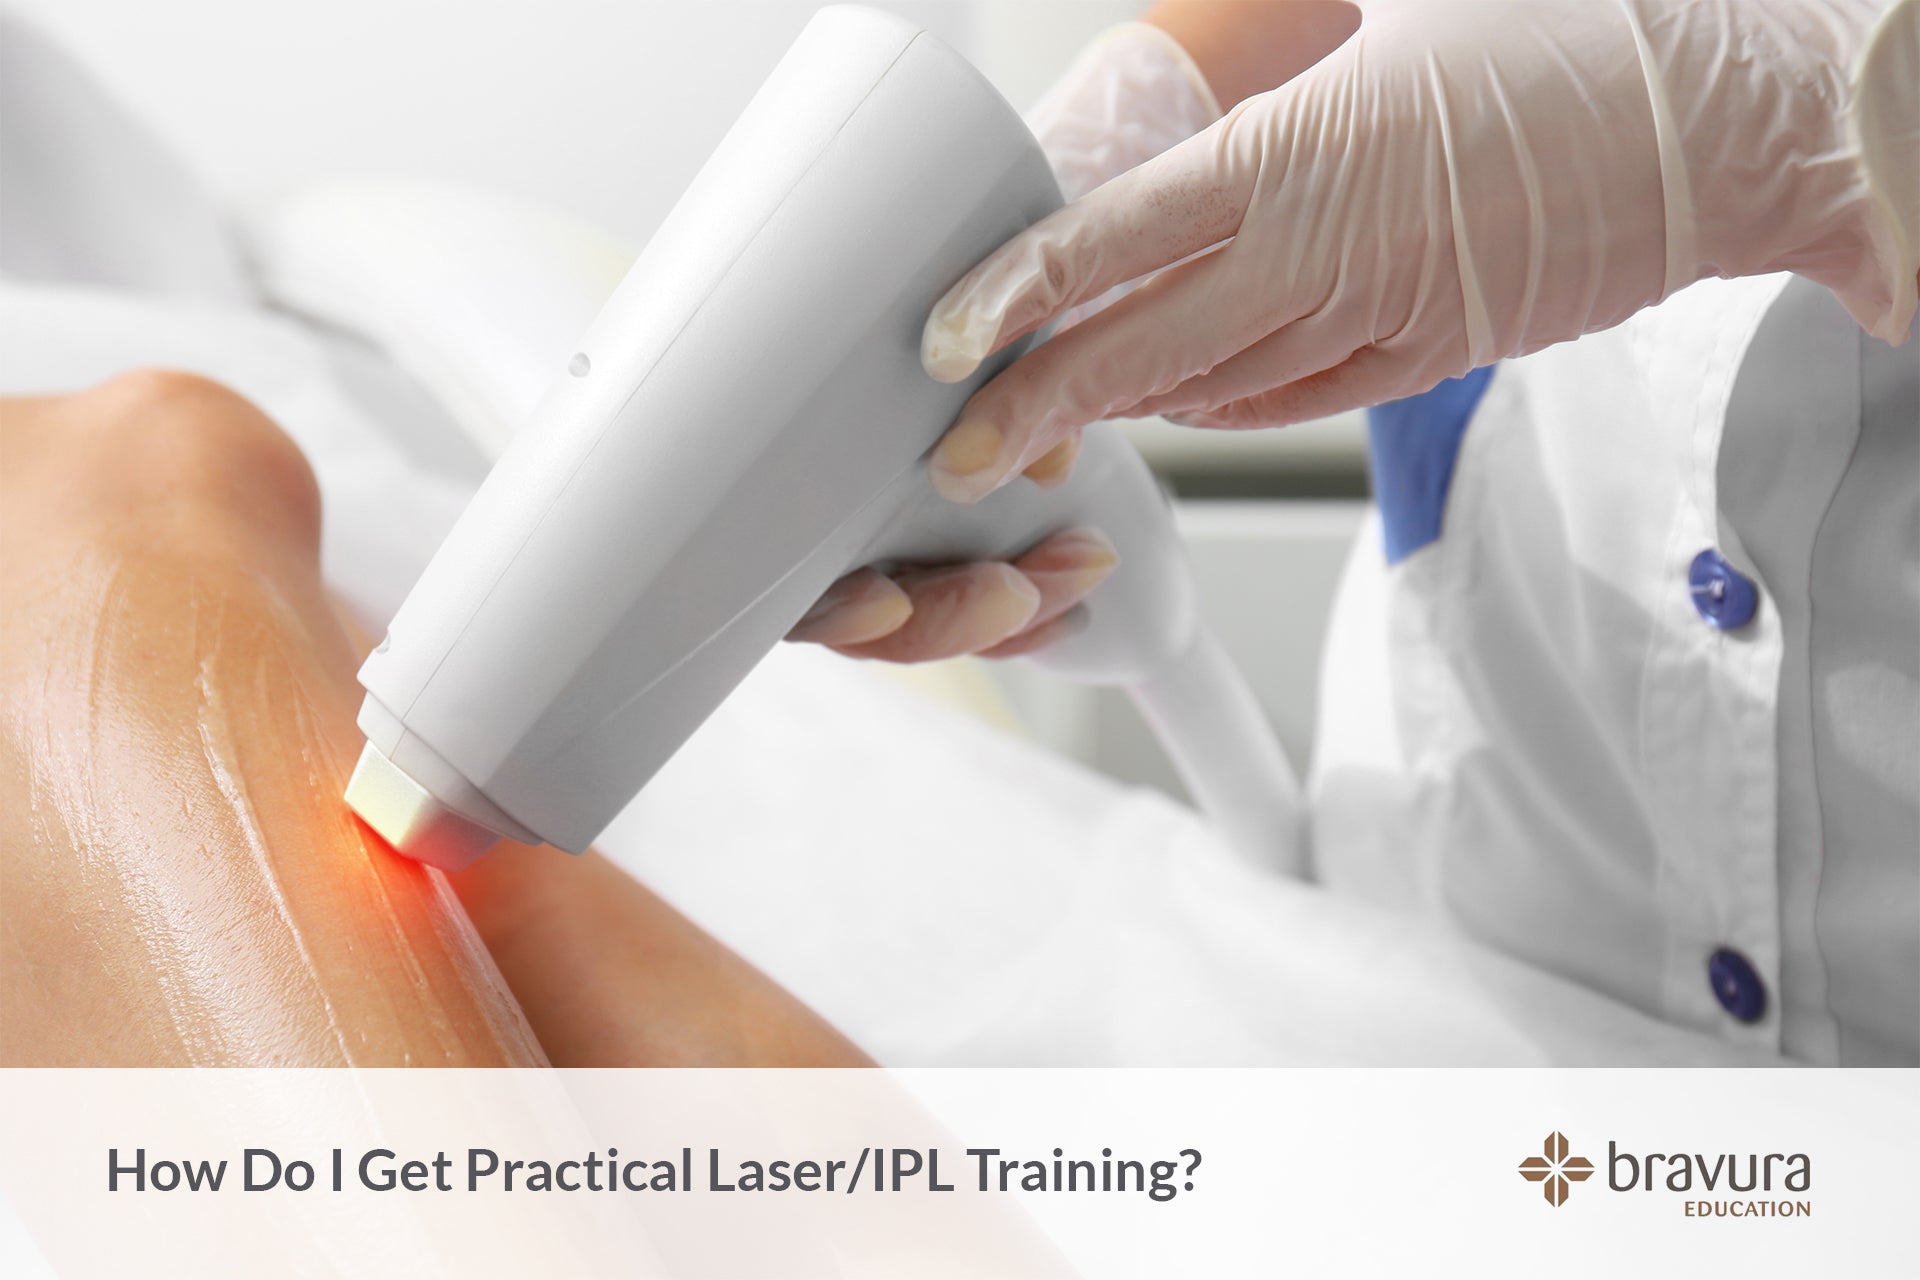 Laser/IPL Practical Training